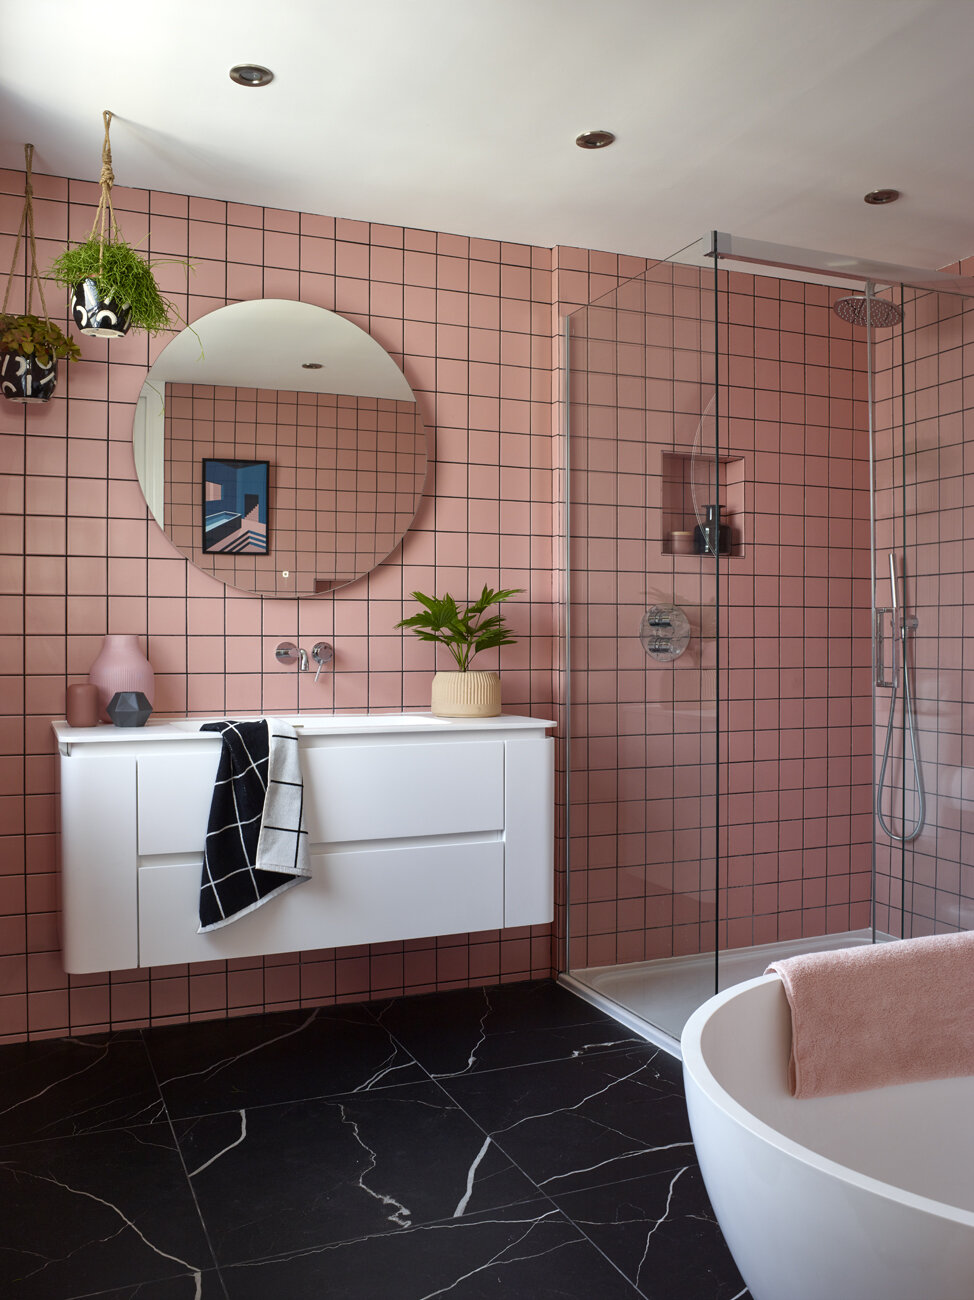 finchley-06-pink-tiled-bathroom.jpg